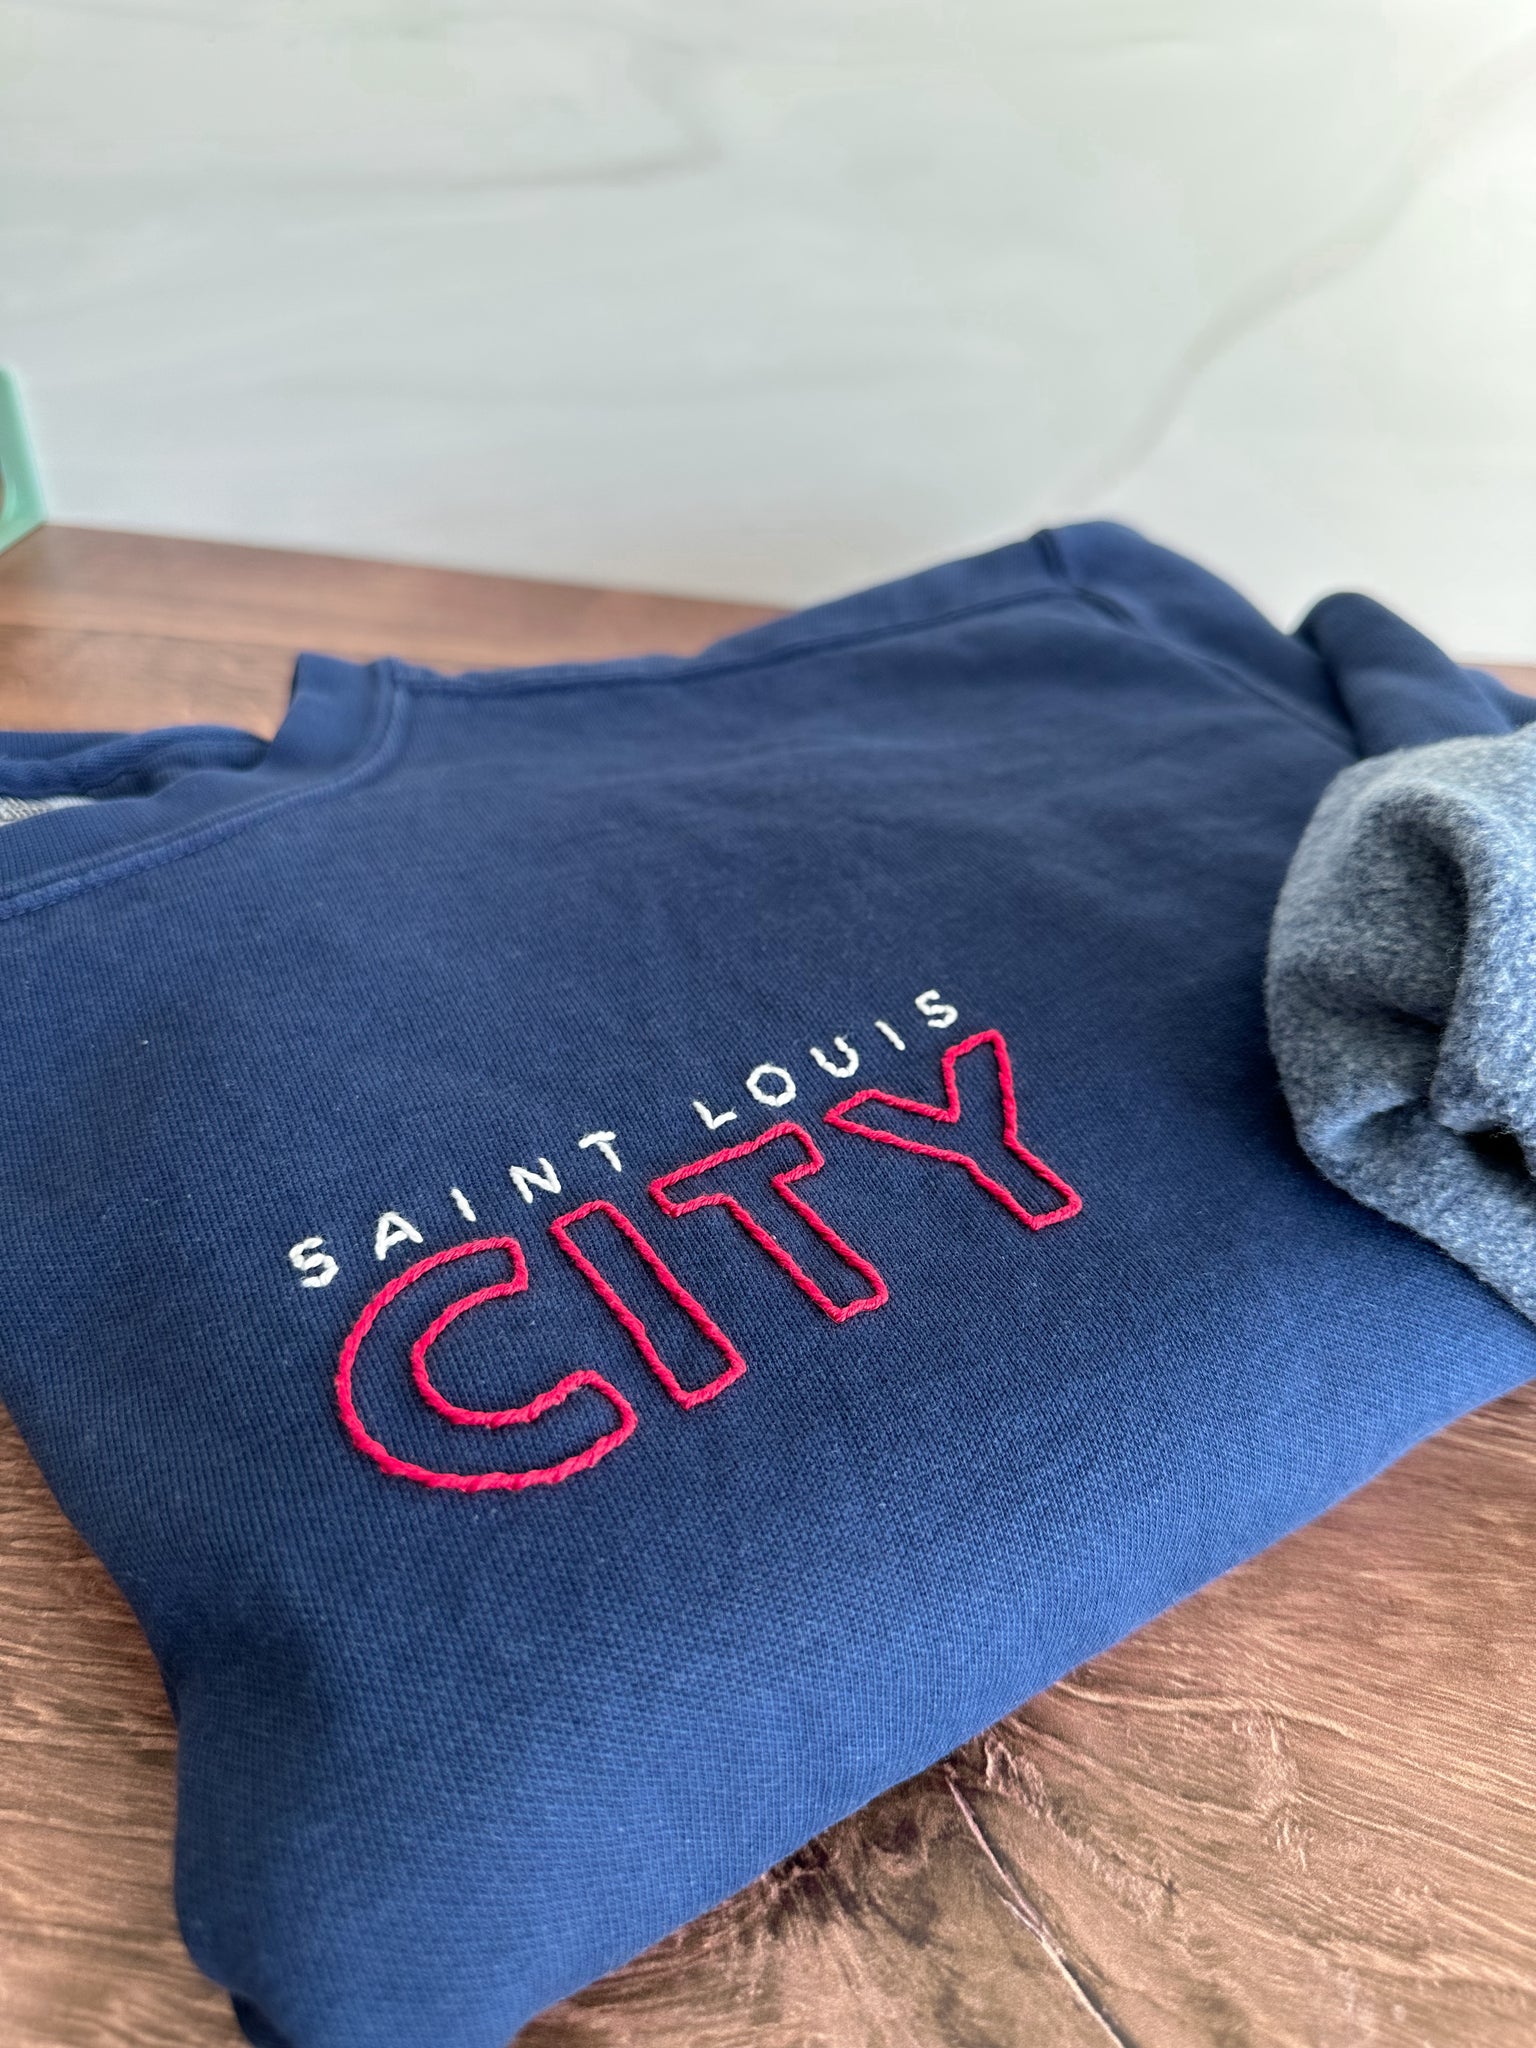 Saint Louis CITY Hand Embroidered Sweatshirt